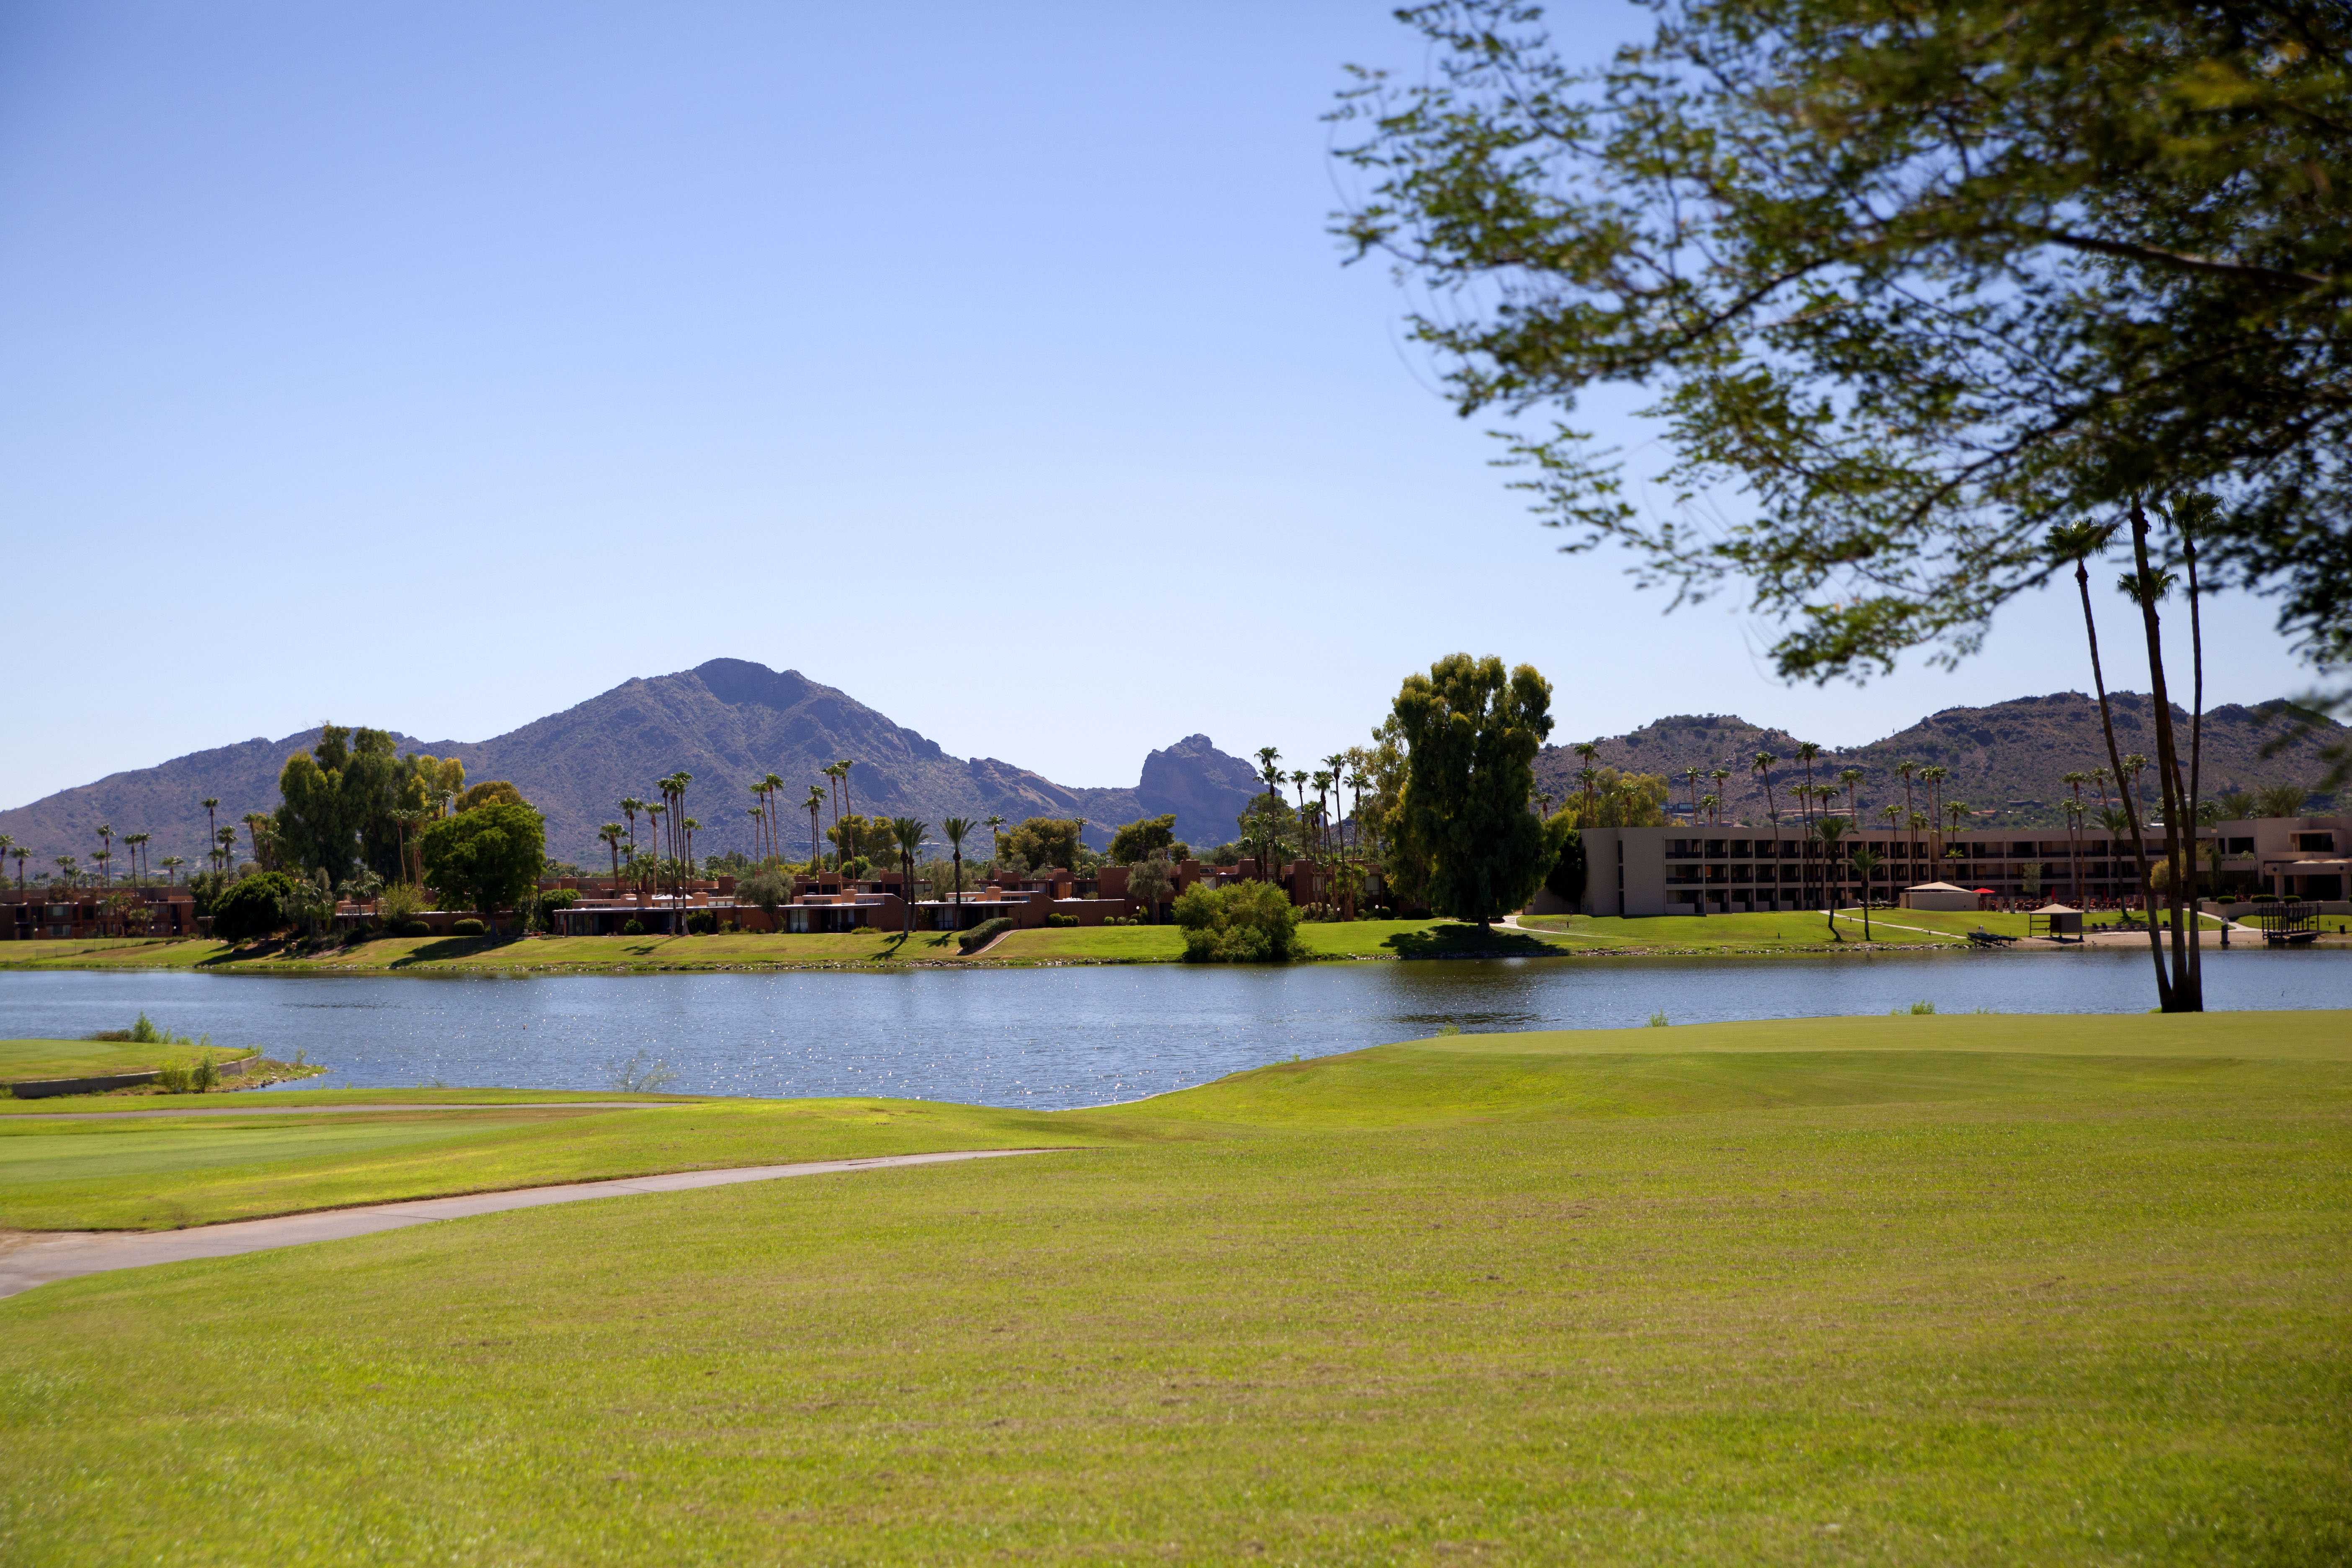 Featured Venue: McCormick Ranch Golf Club